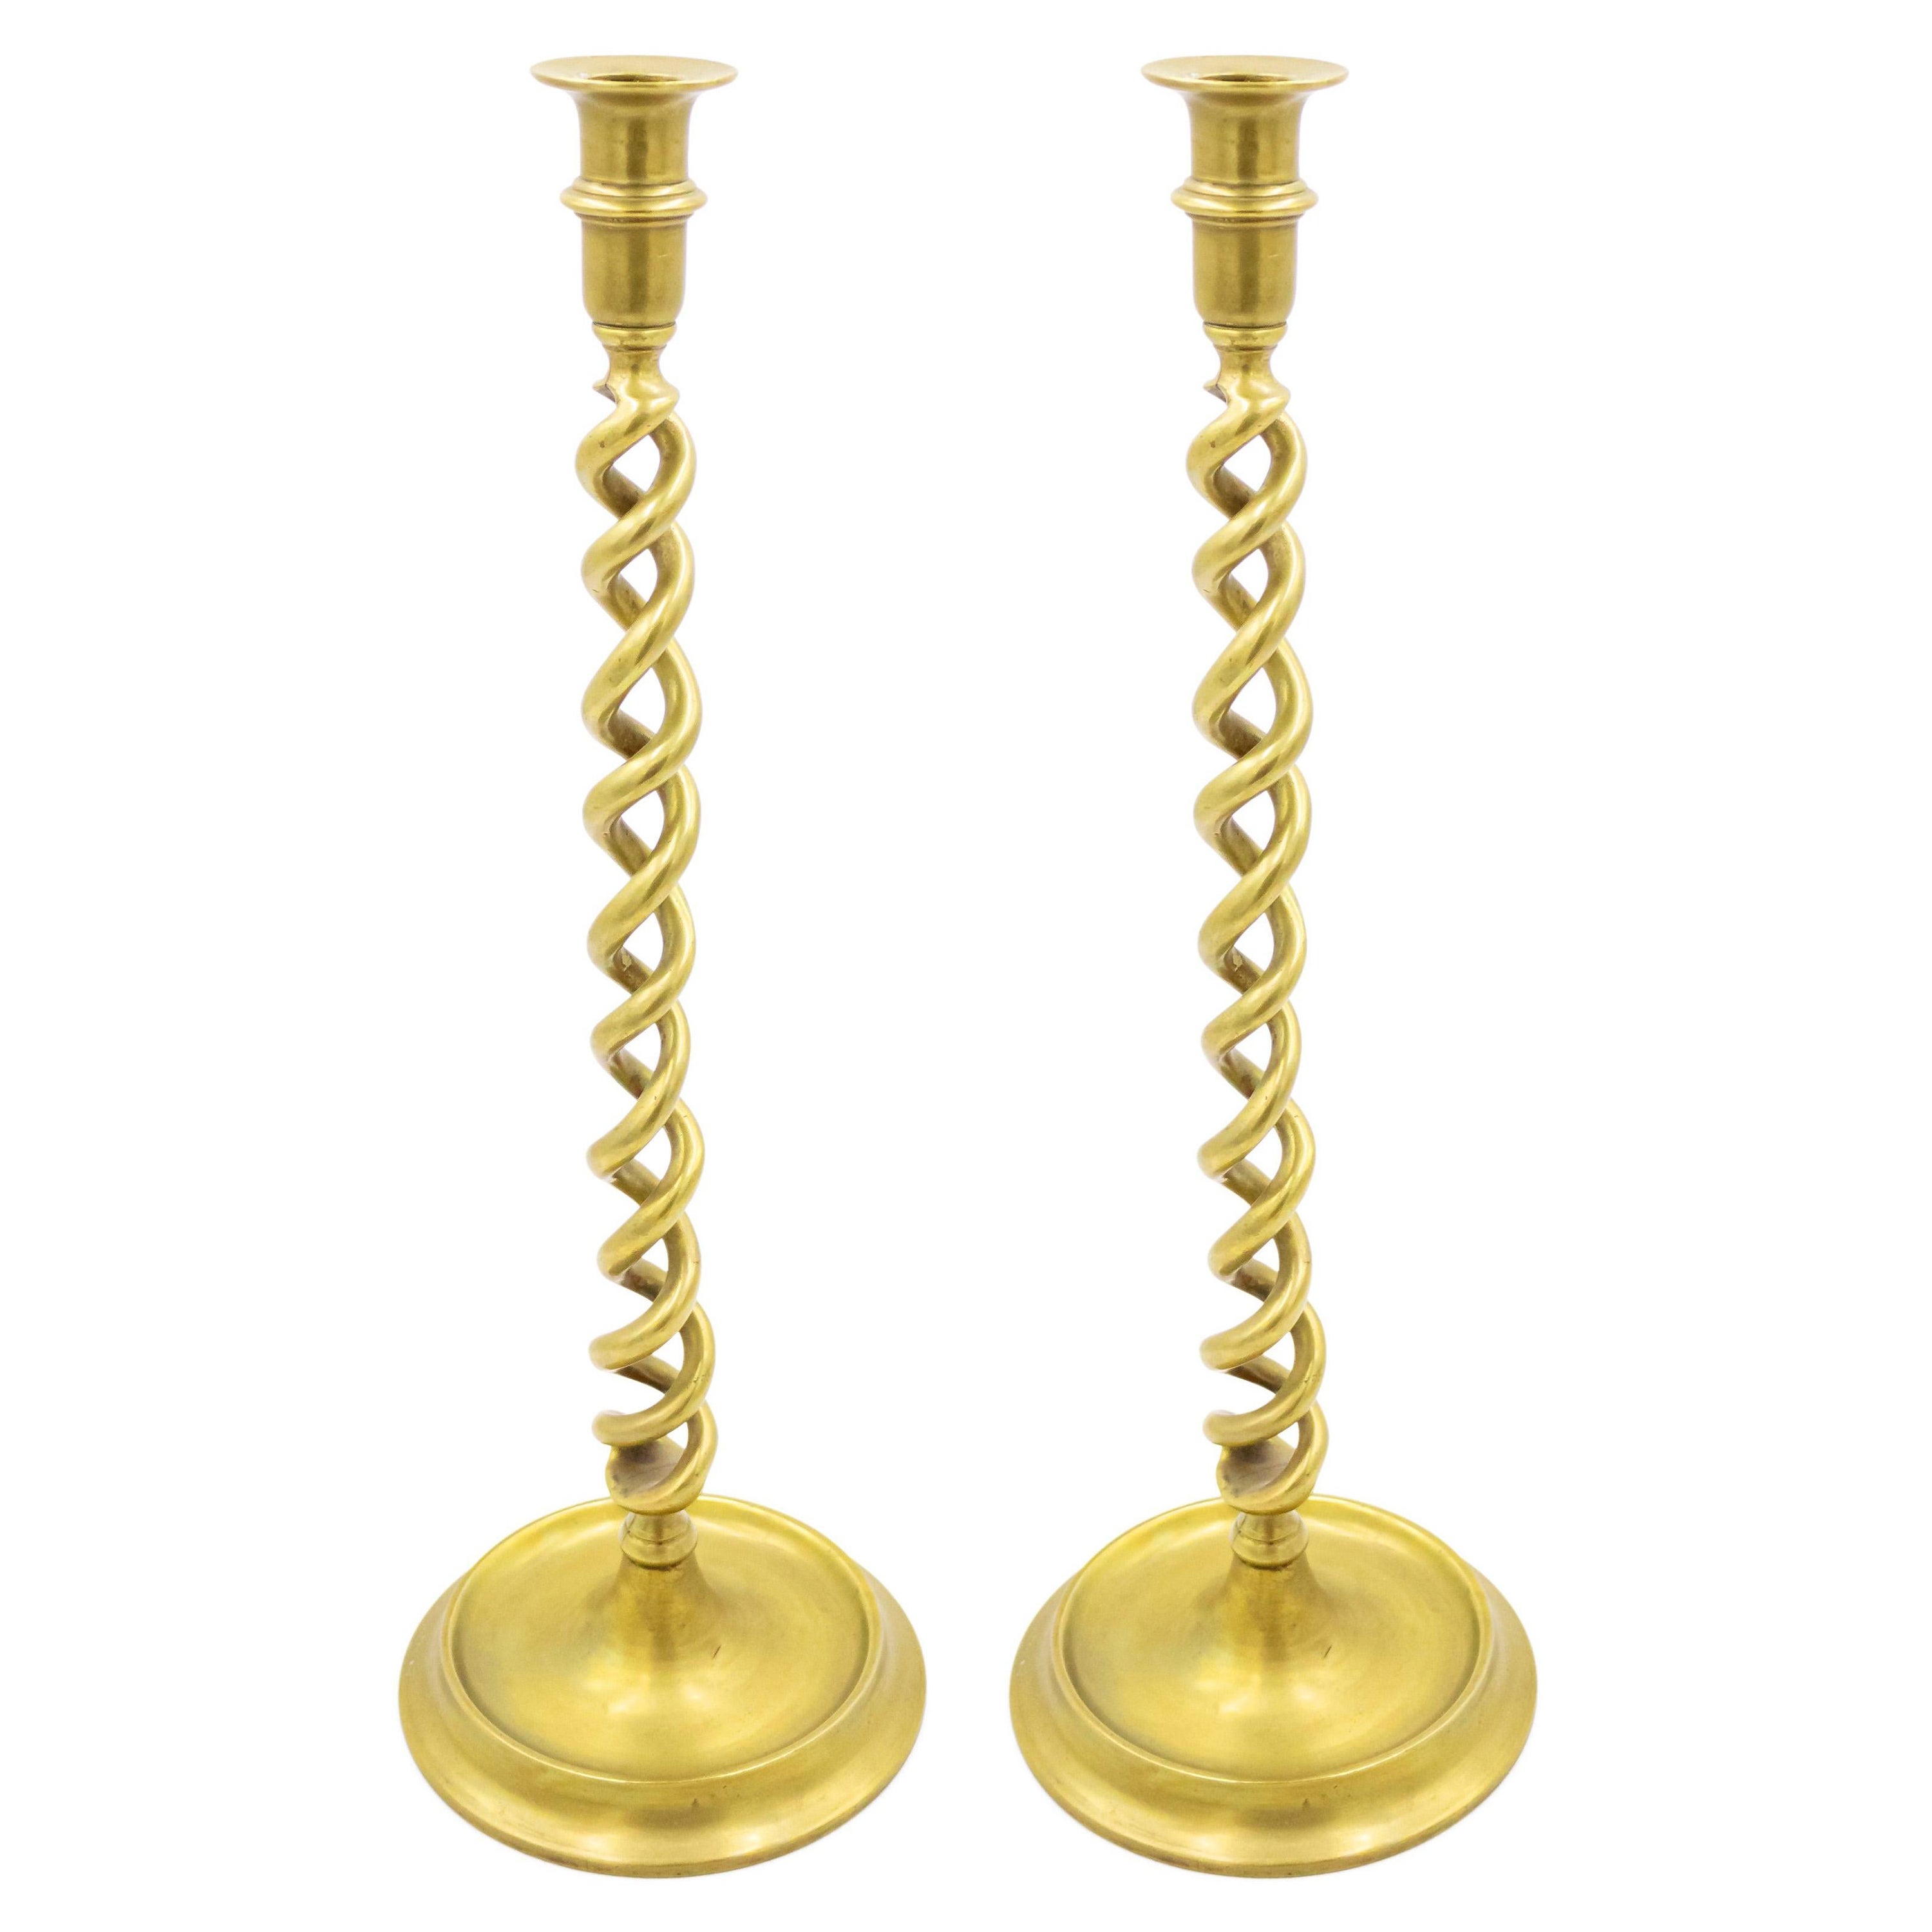 Pair of Italian Renaissance Style Brass Candlesticks For Sale